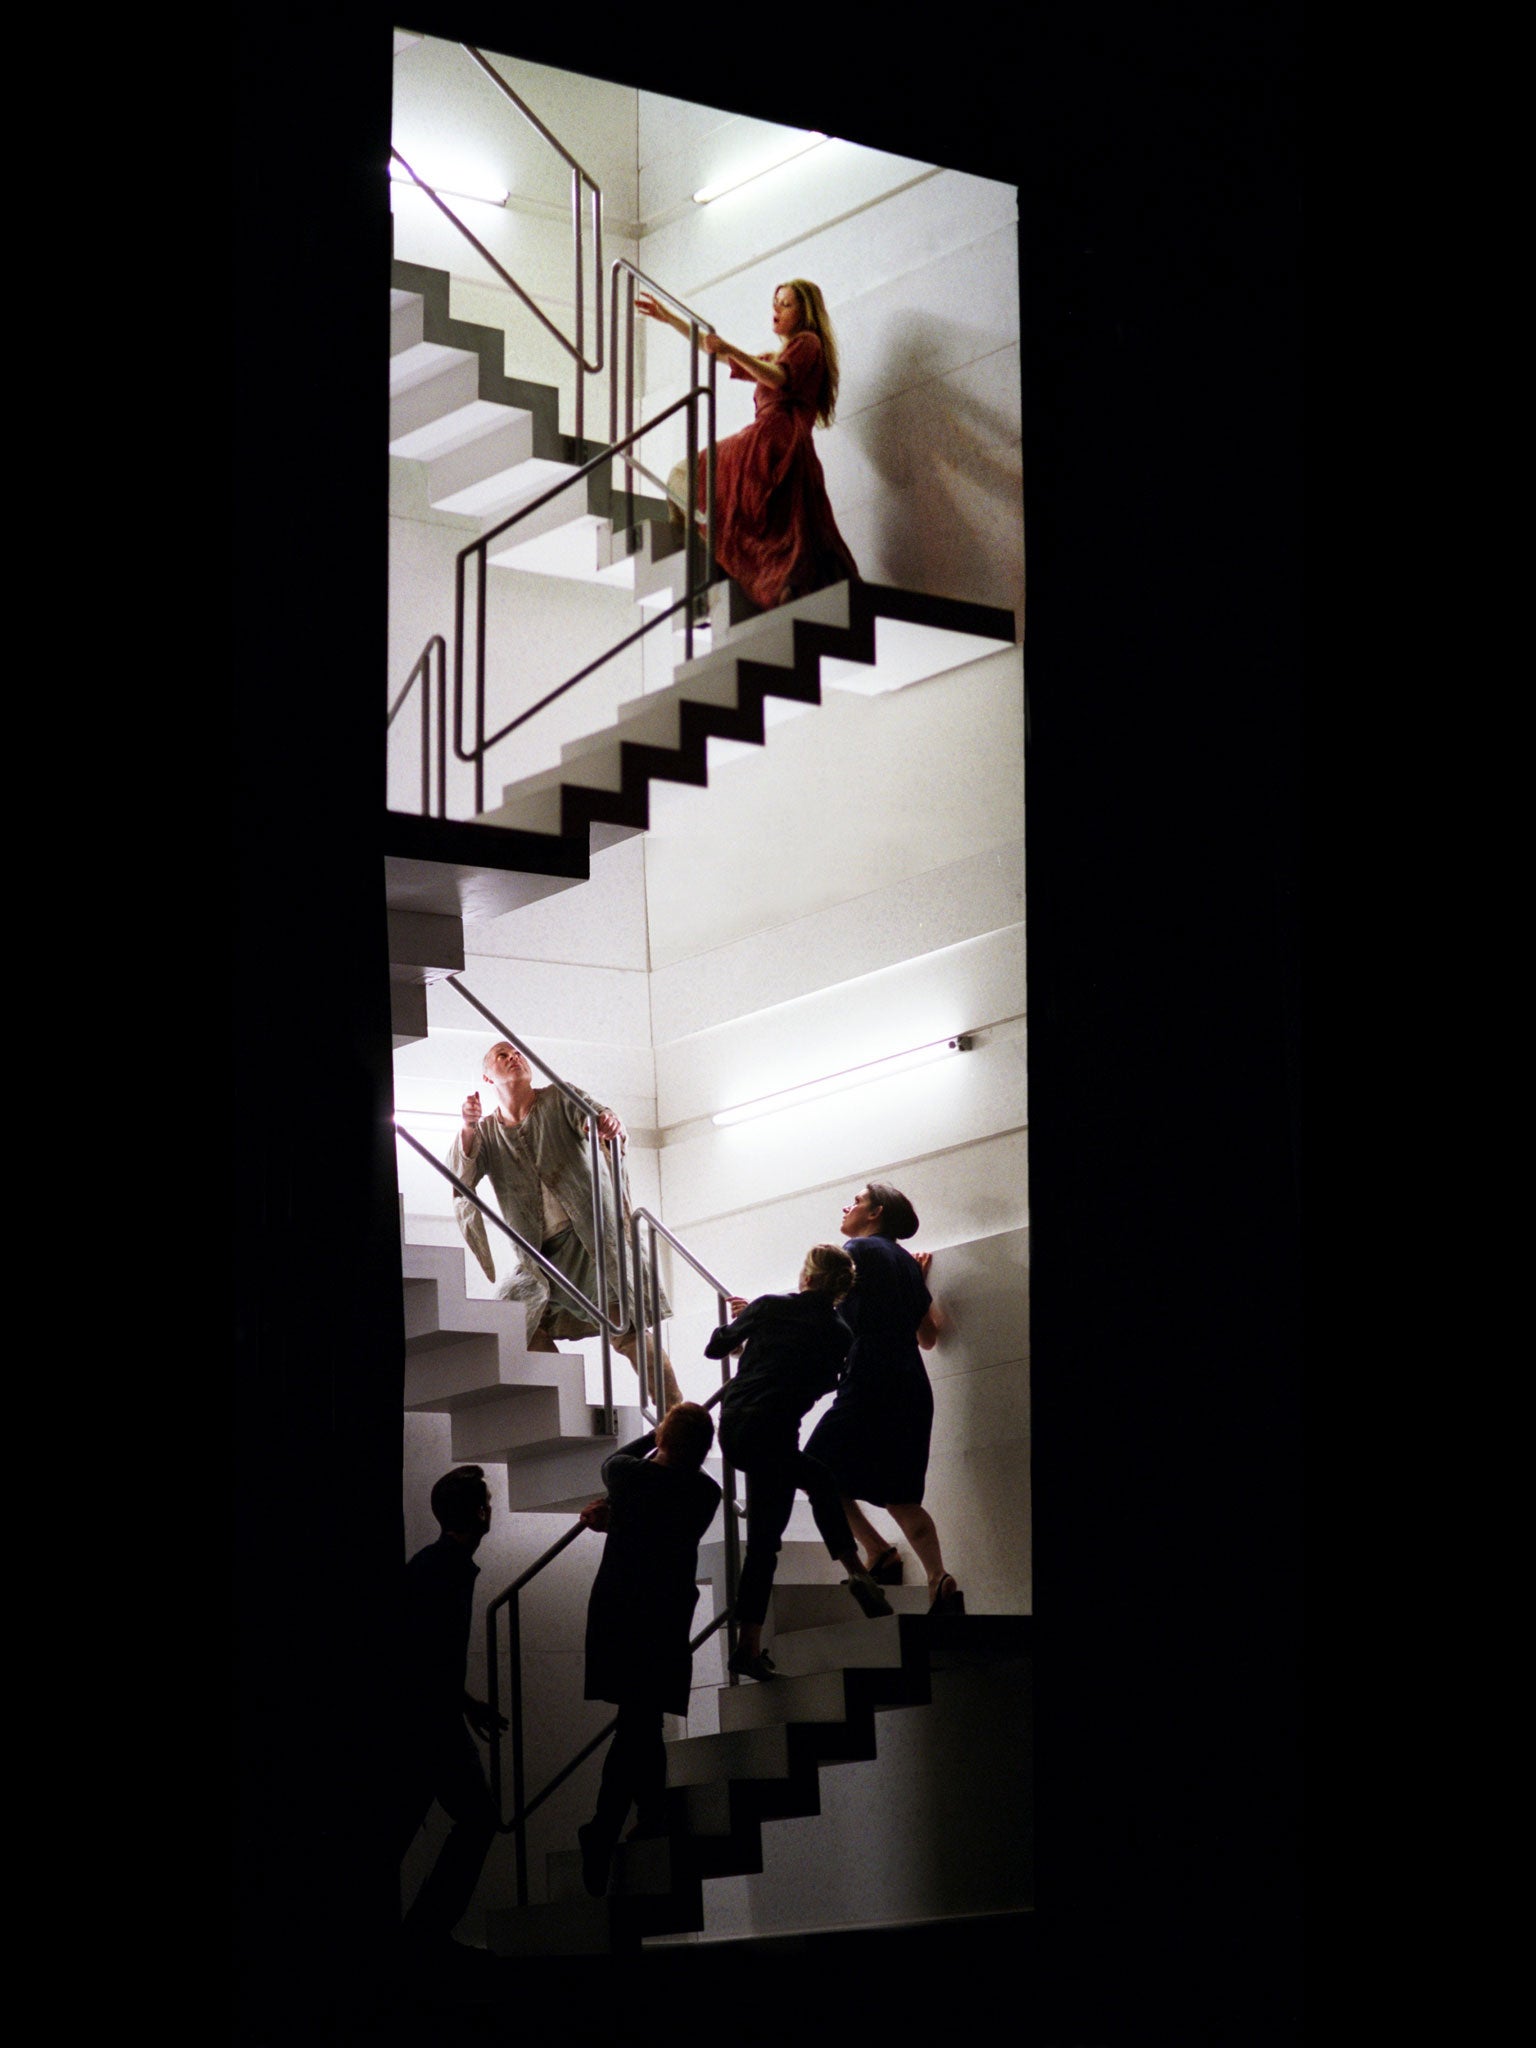 Top notch: Barbara Hannigan as Agnès climbs to her doom